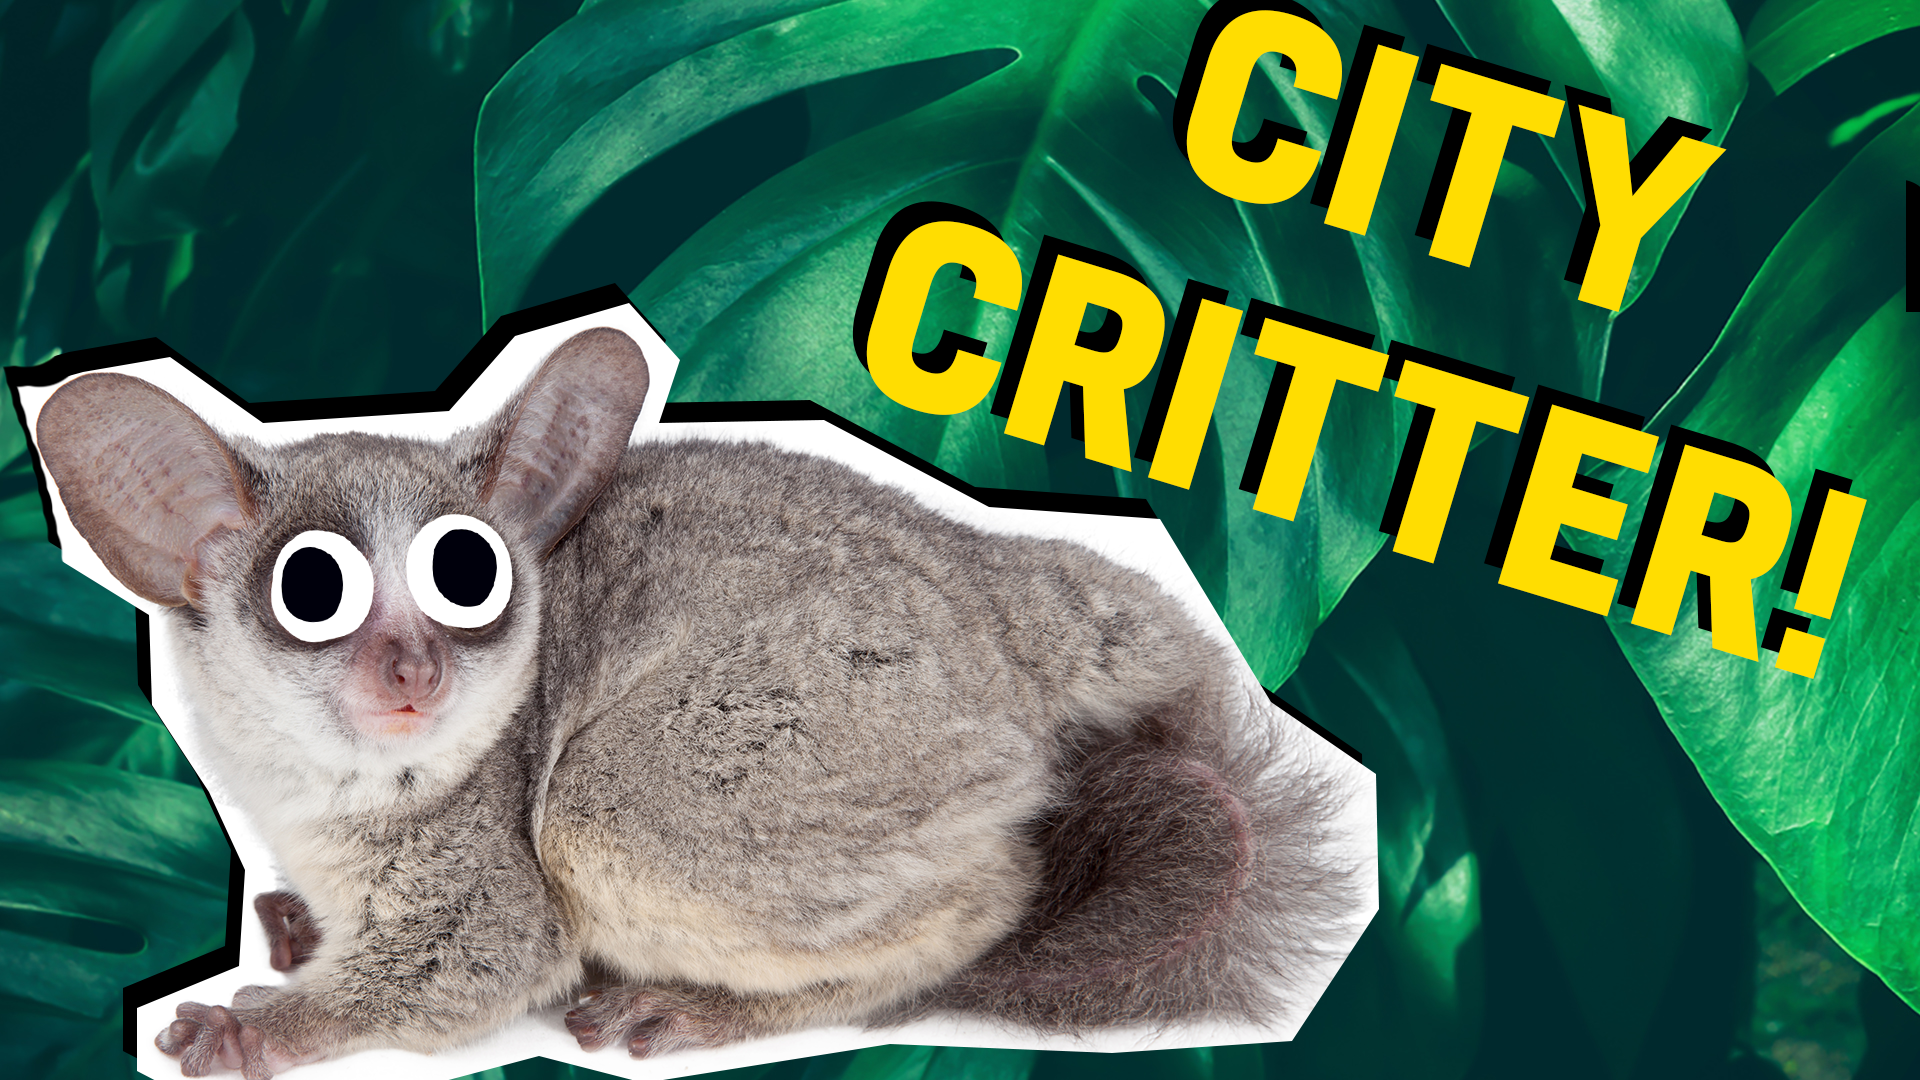 City critter result